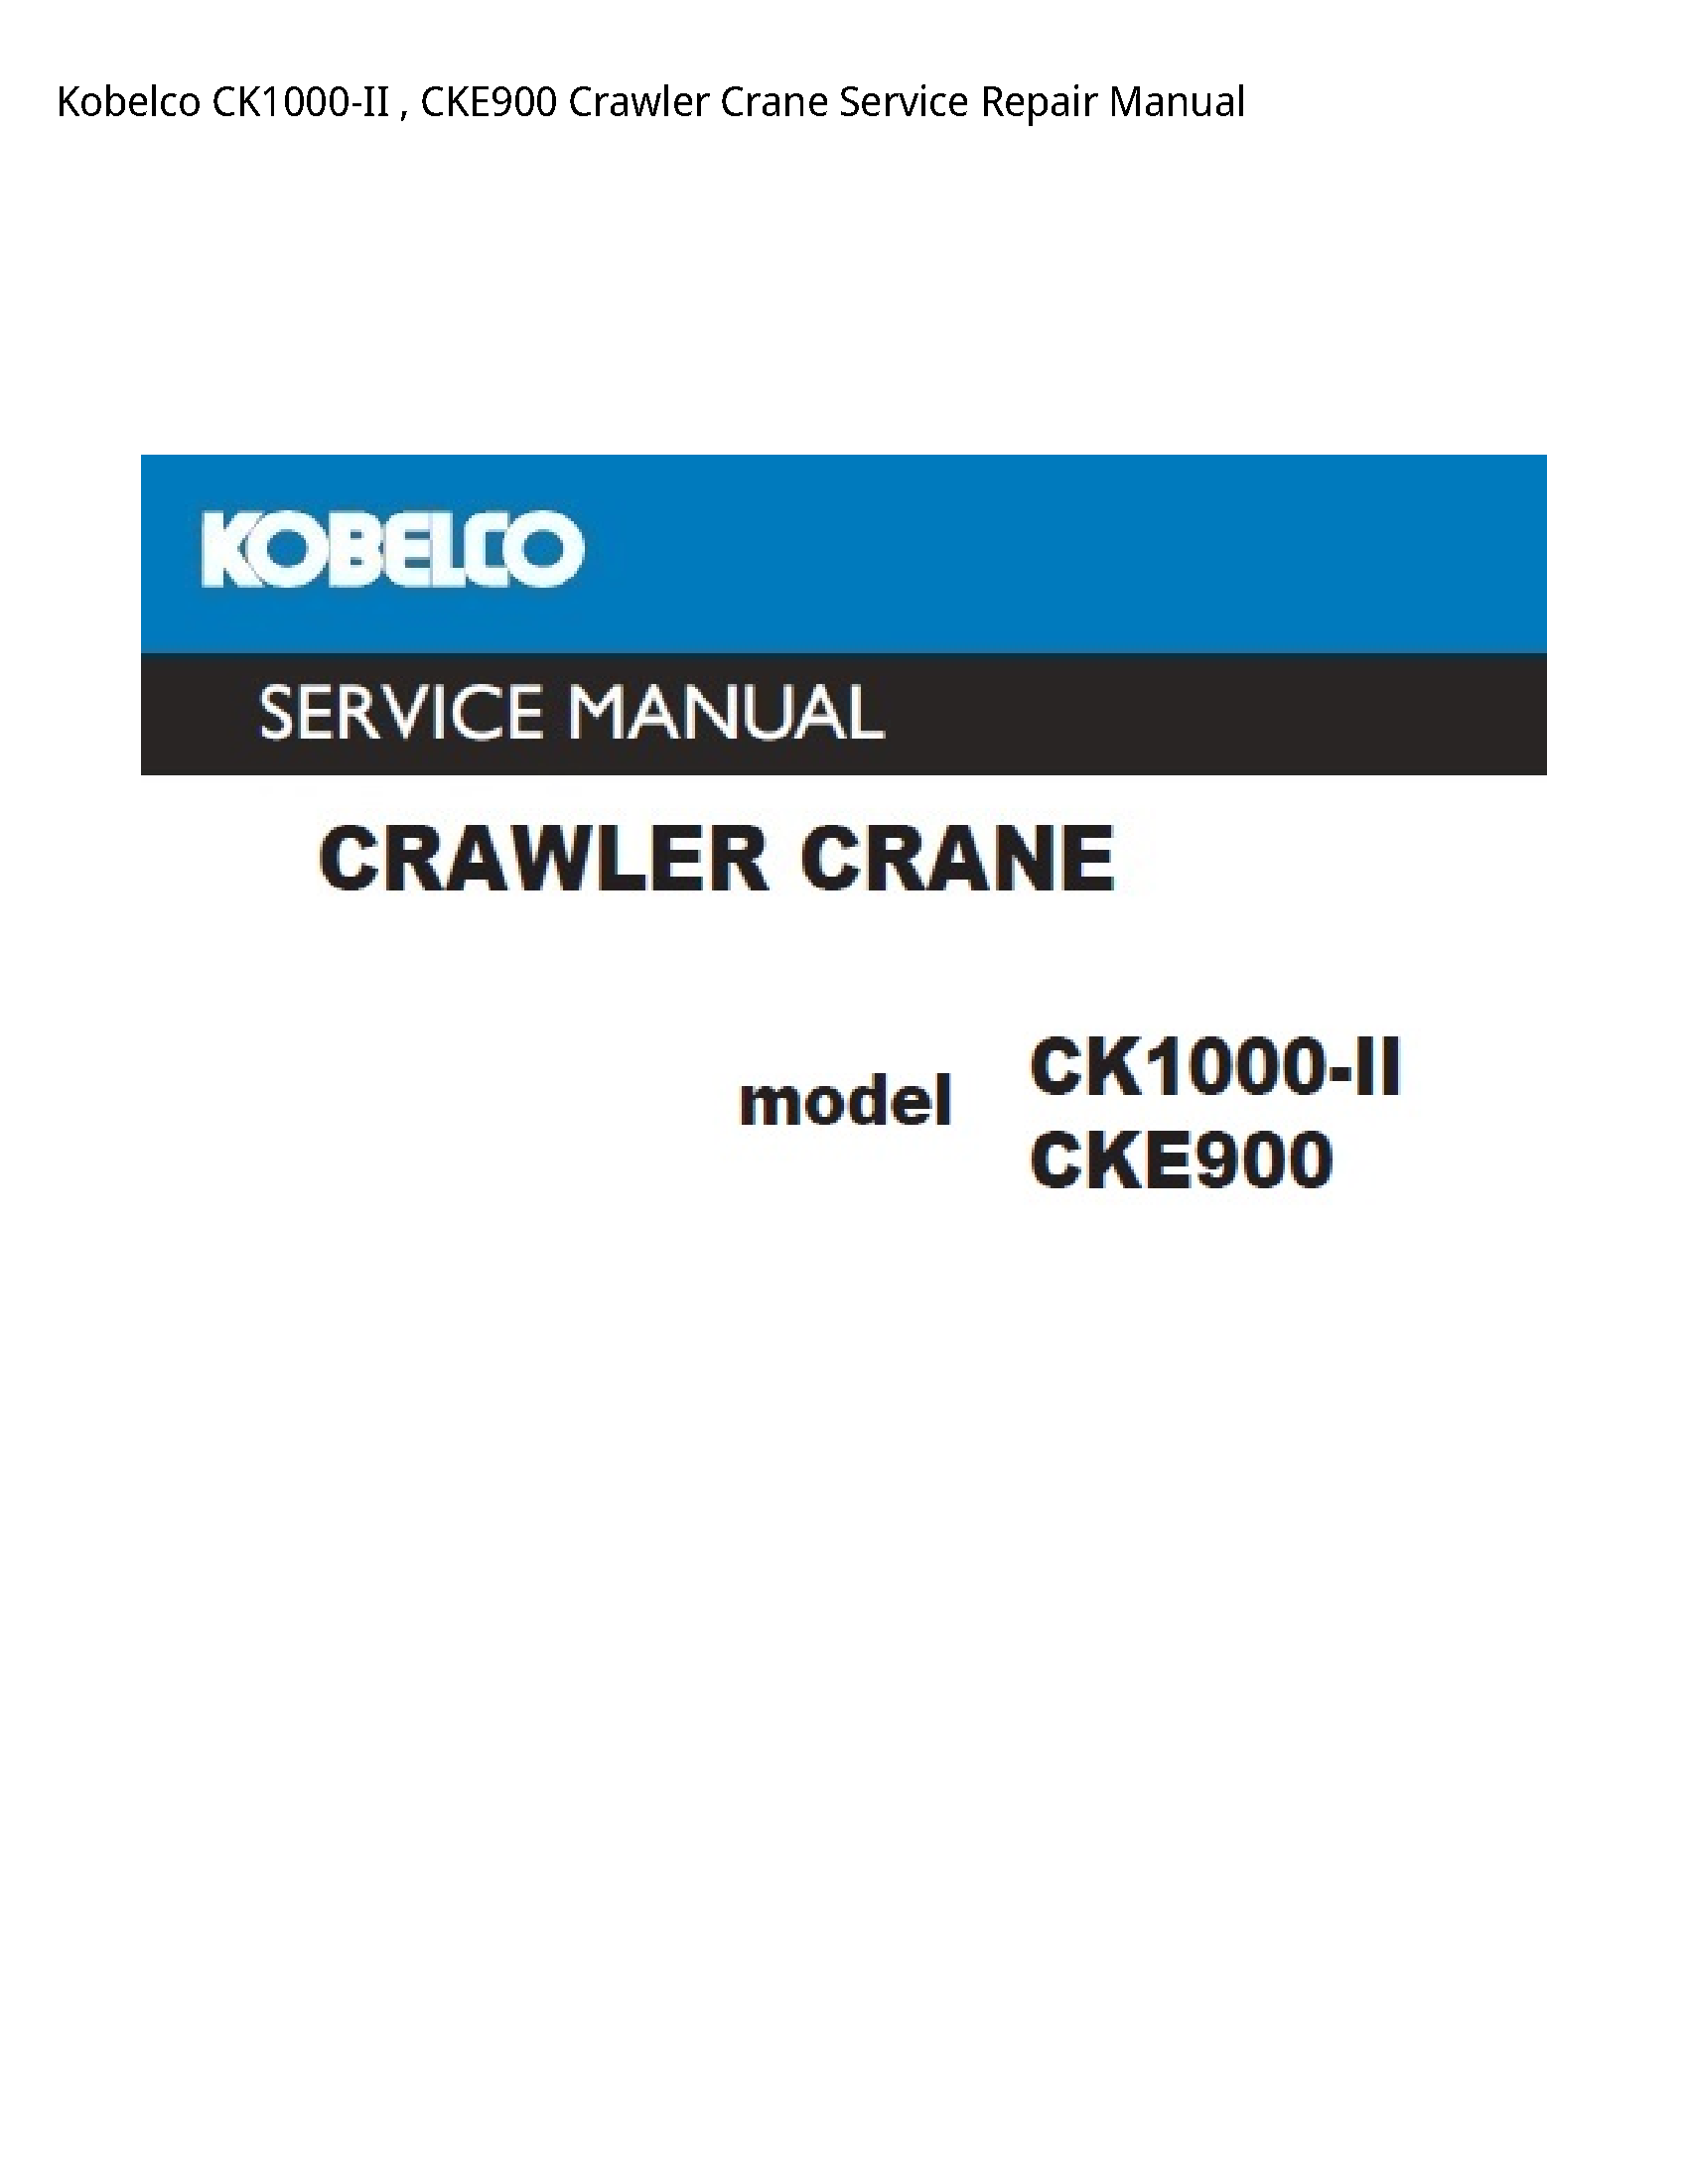 Kobelco CK1000-II Crawler Crane manual